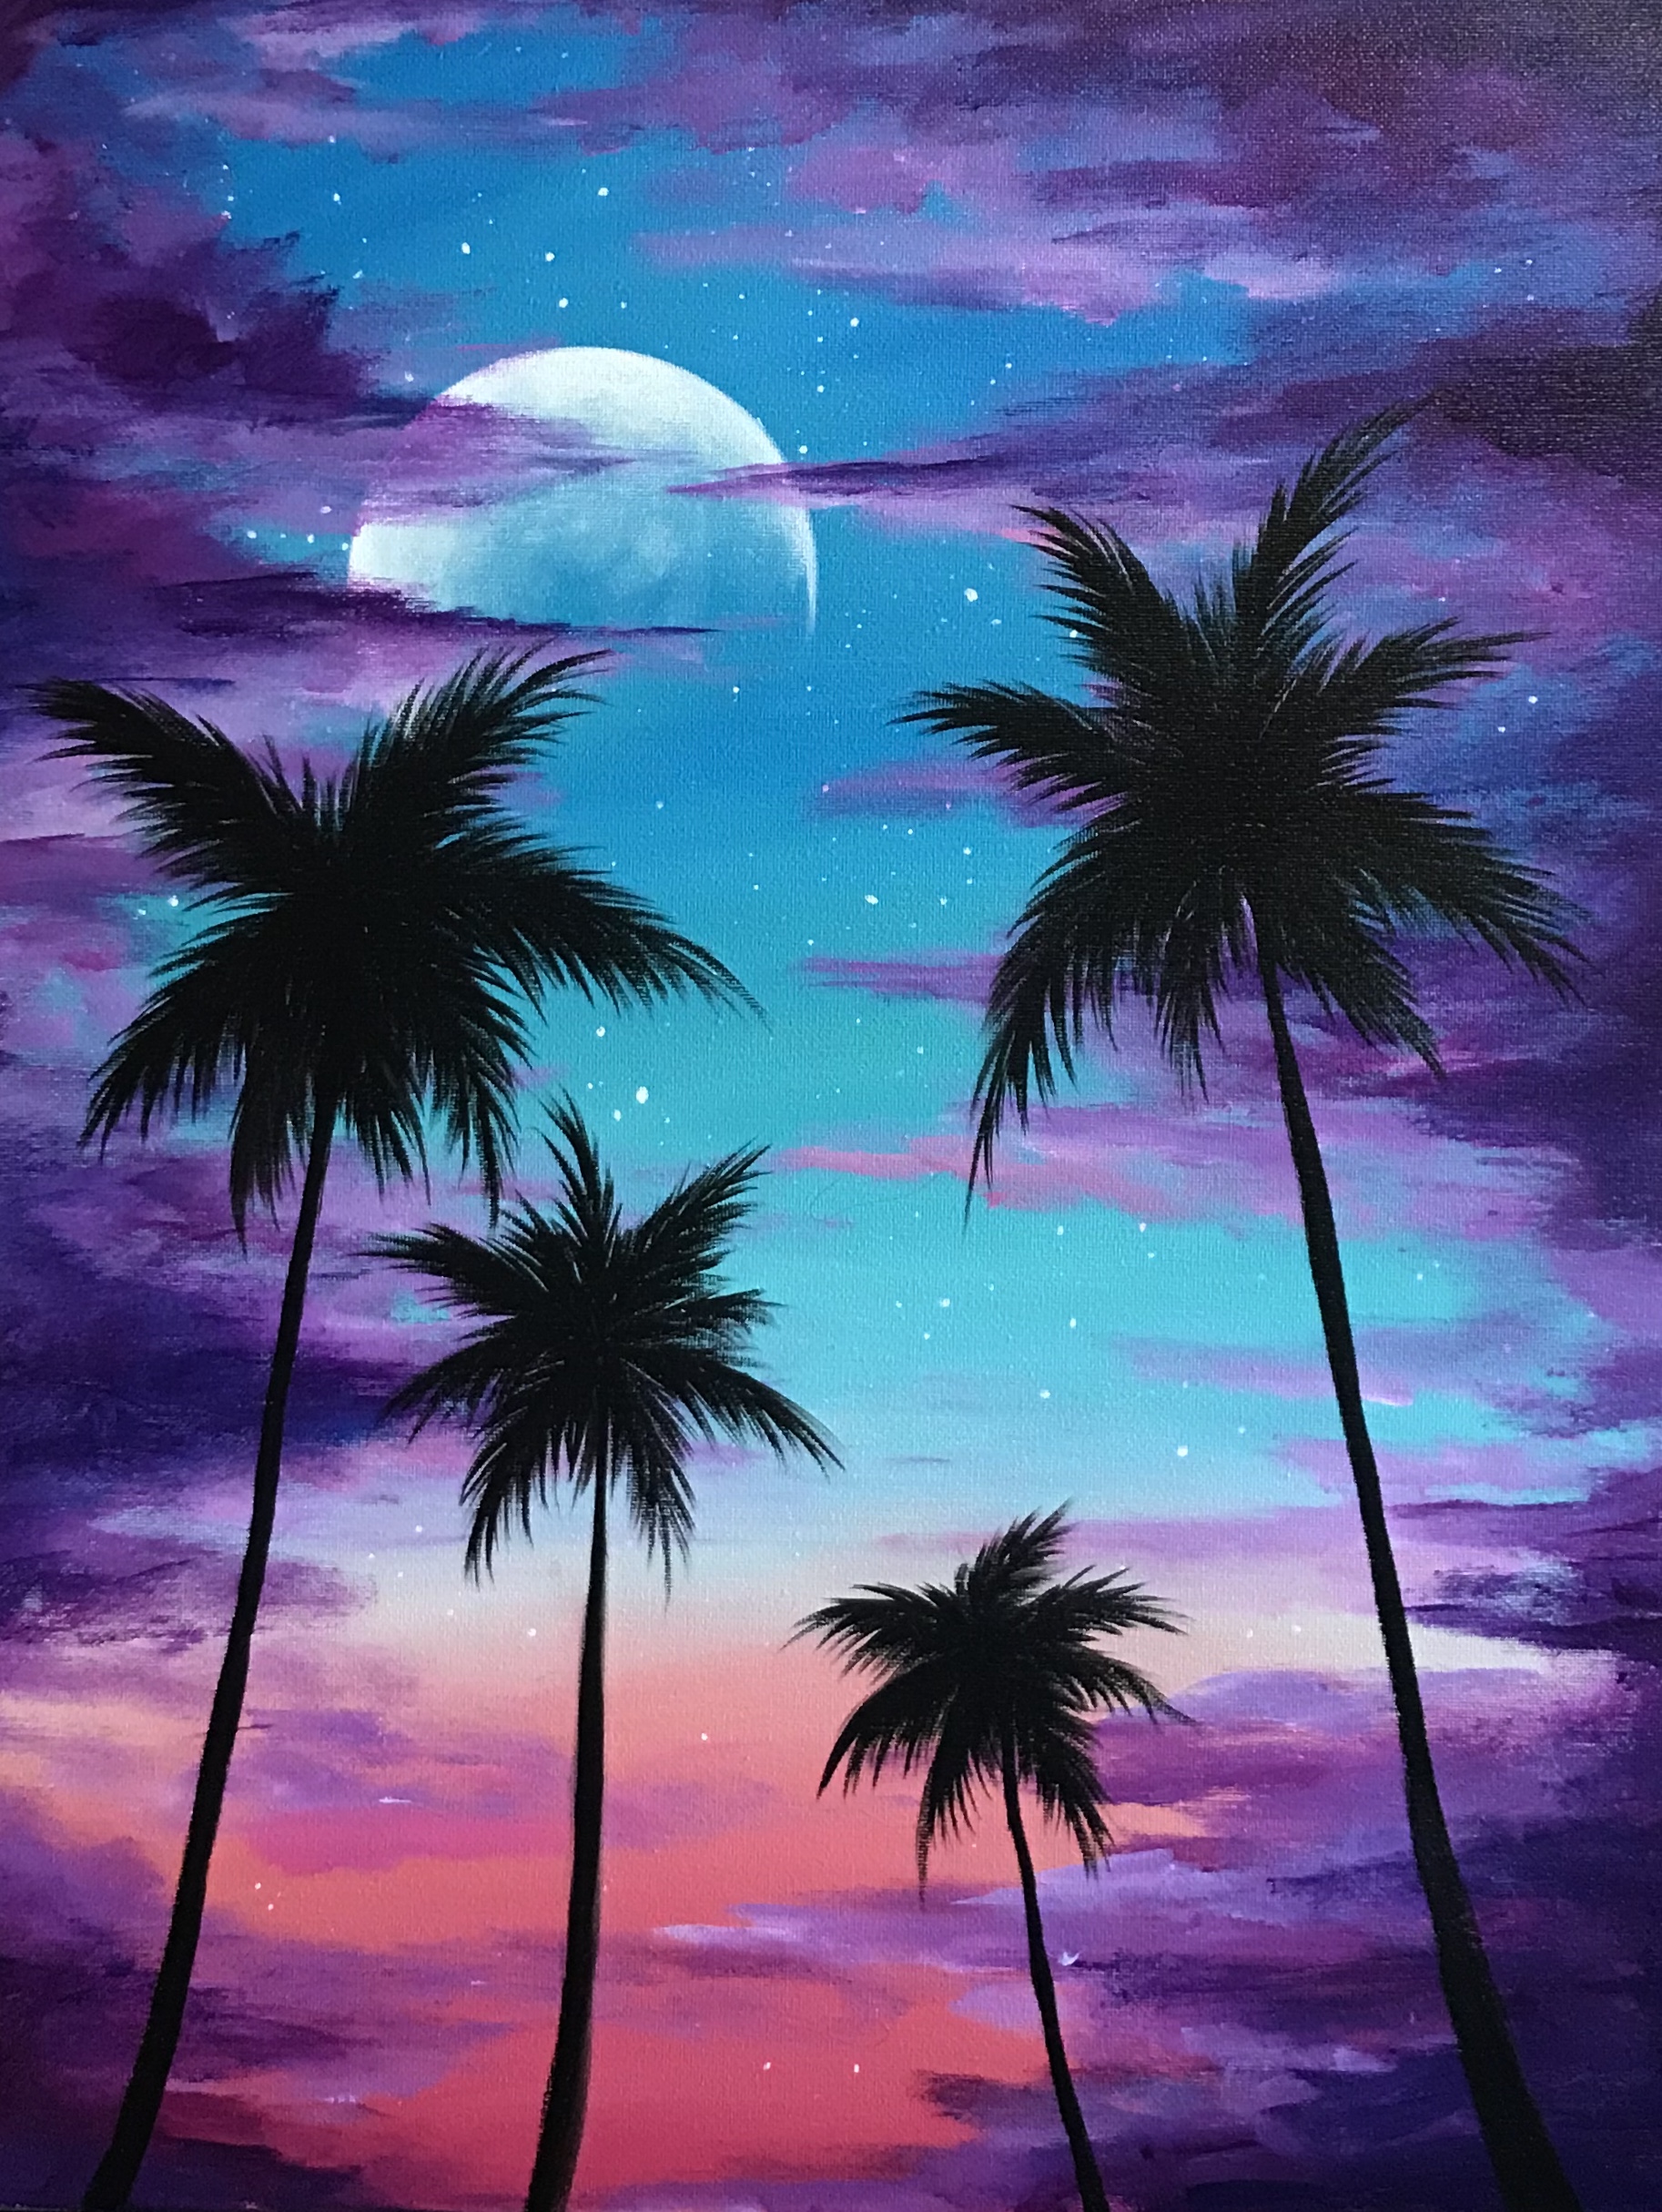 A Vibrant Palm Sky experience project by Yaymaker